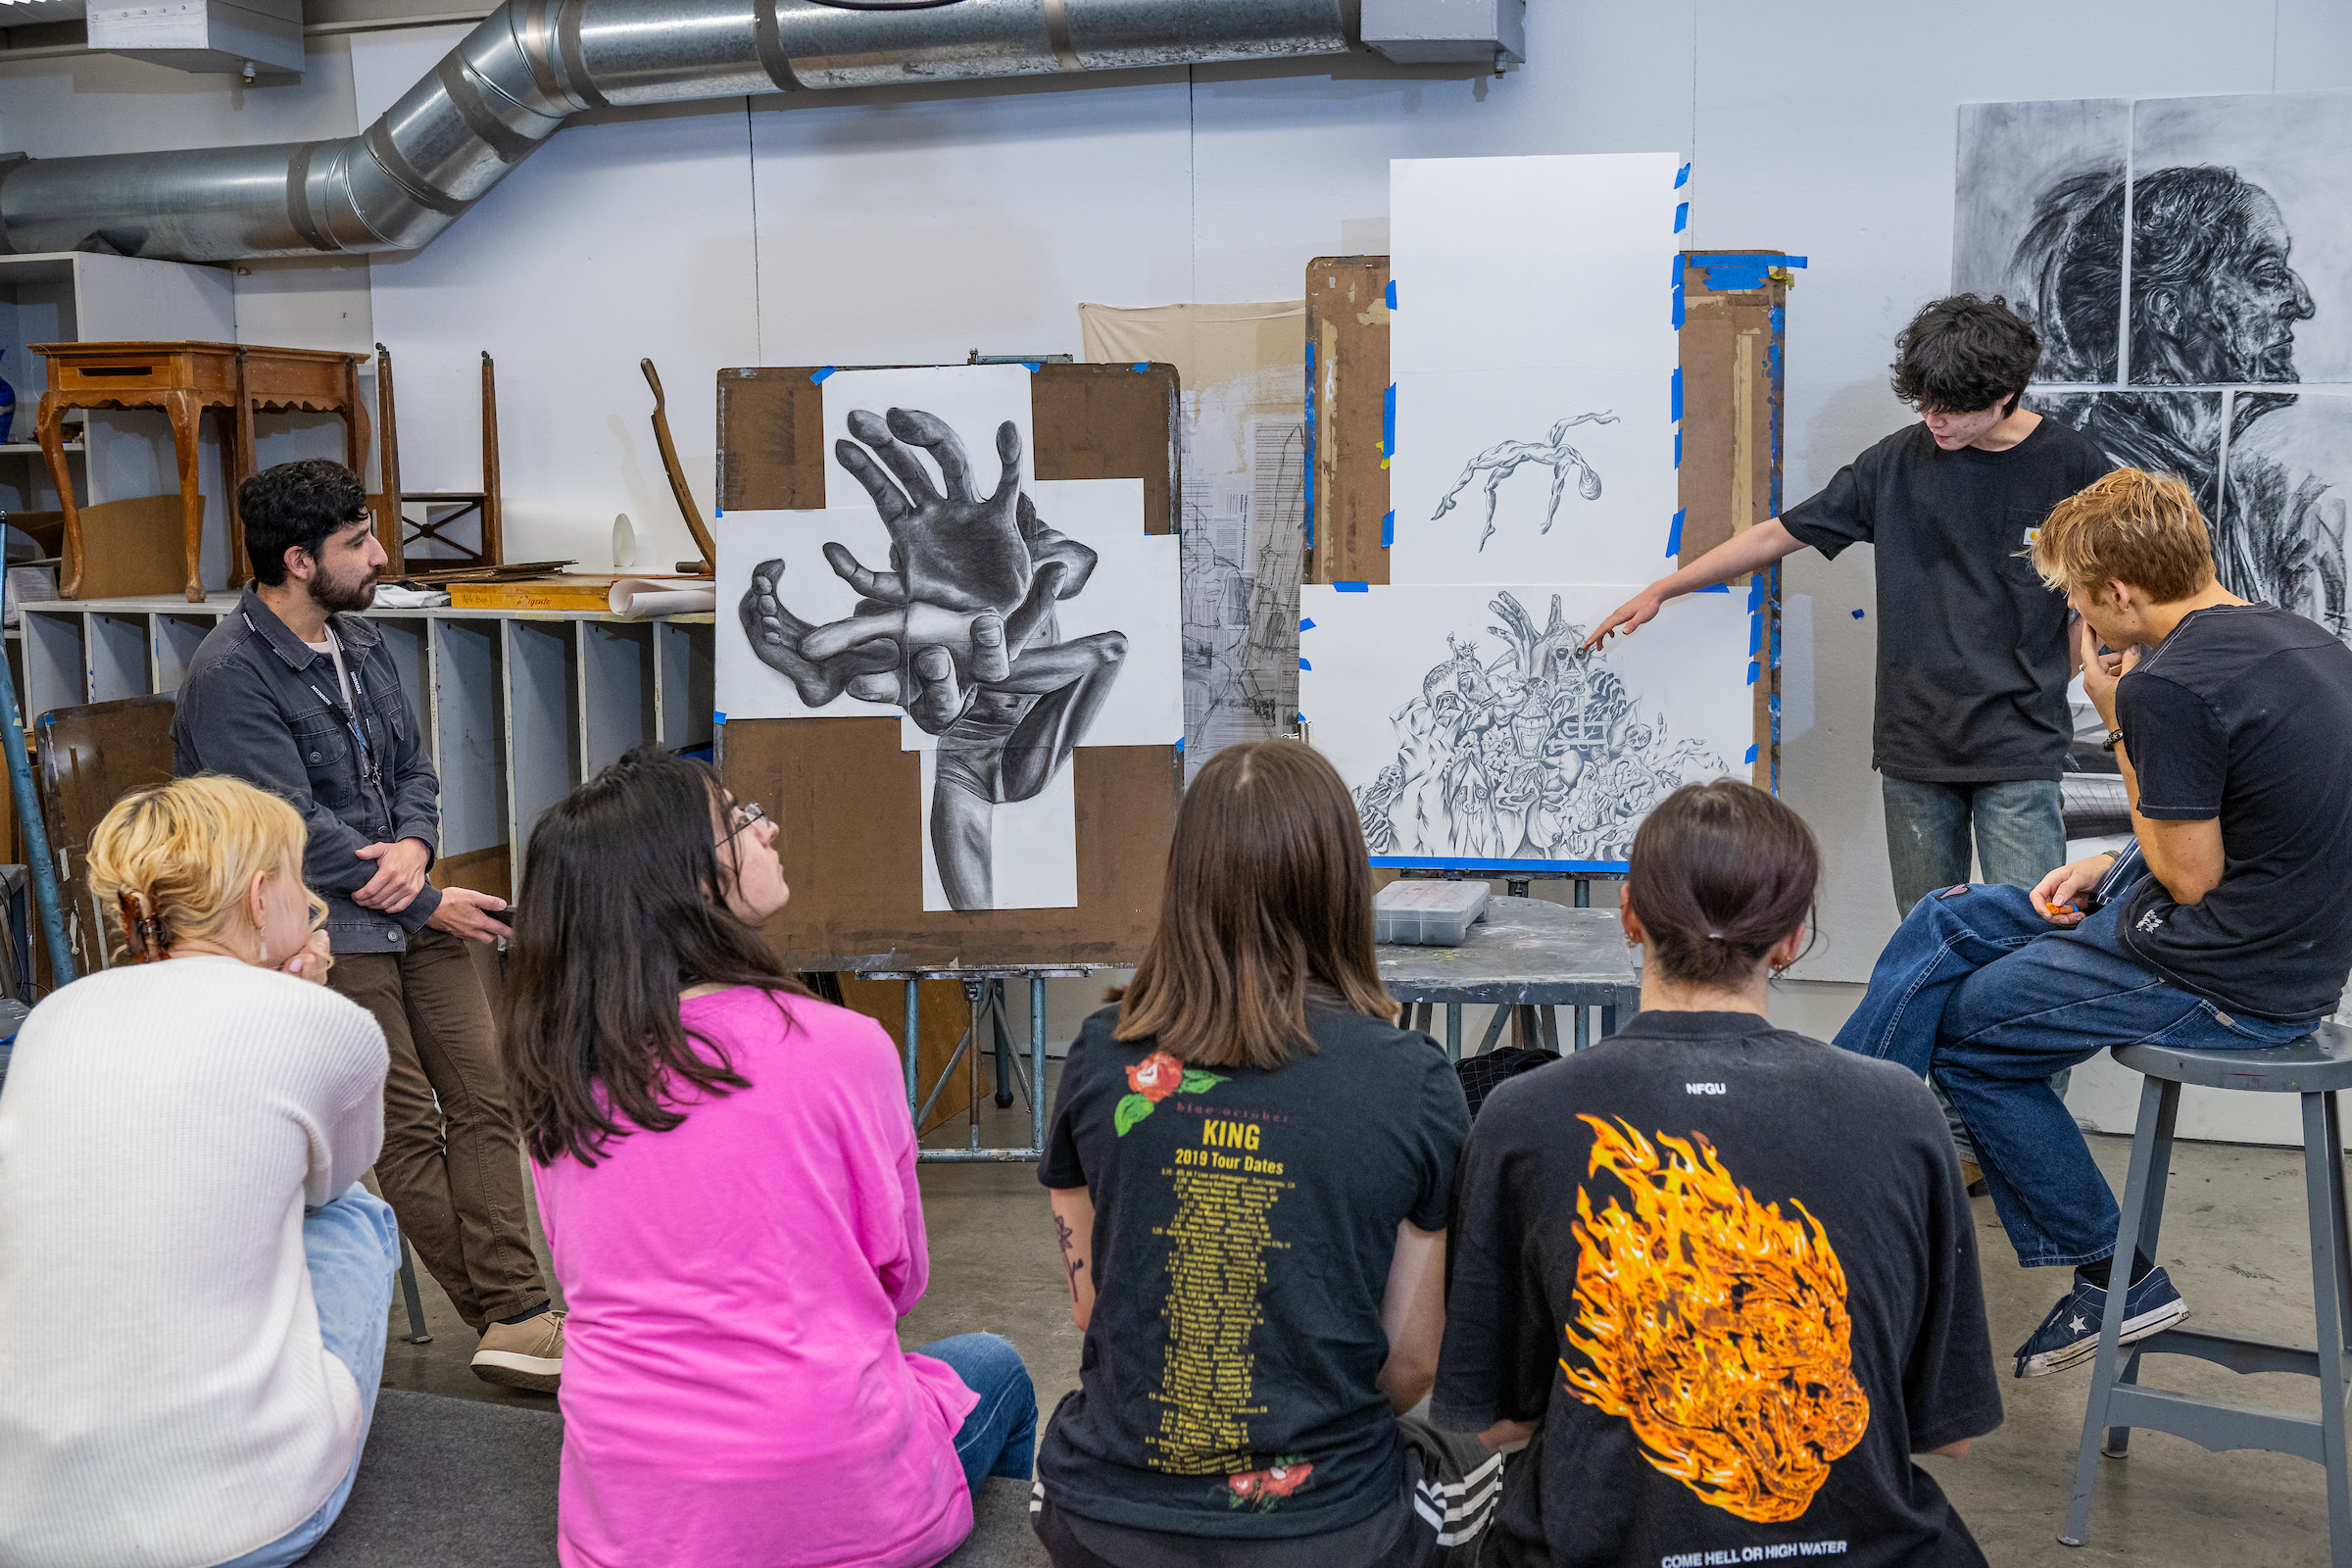 students looking at artwork critiquing